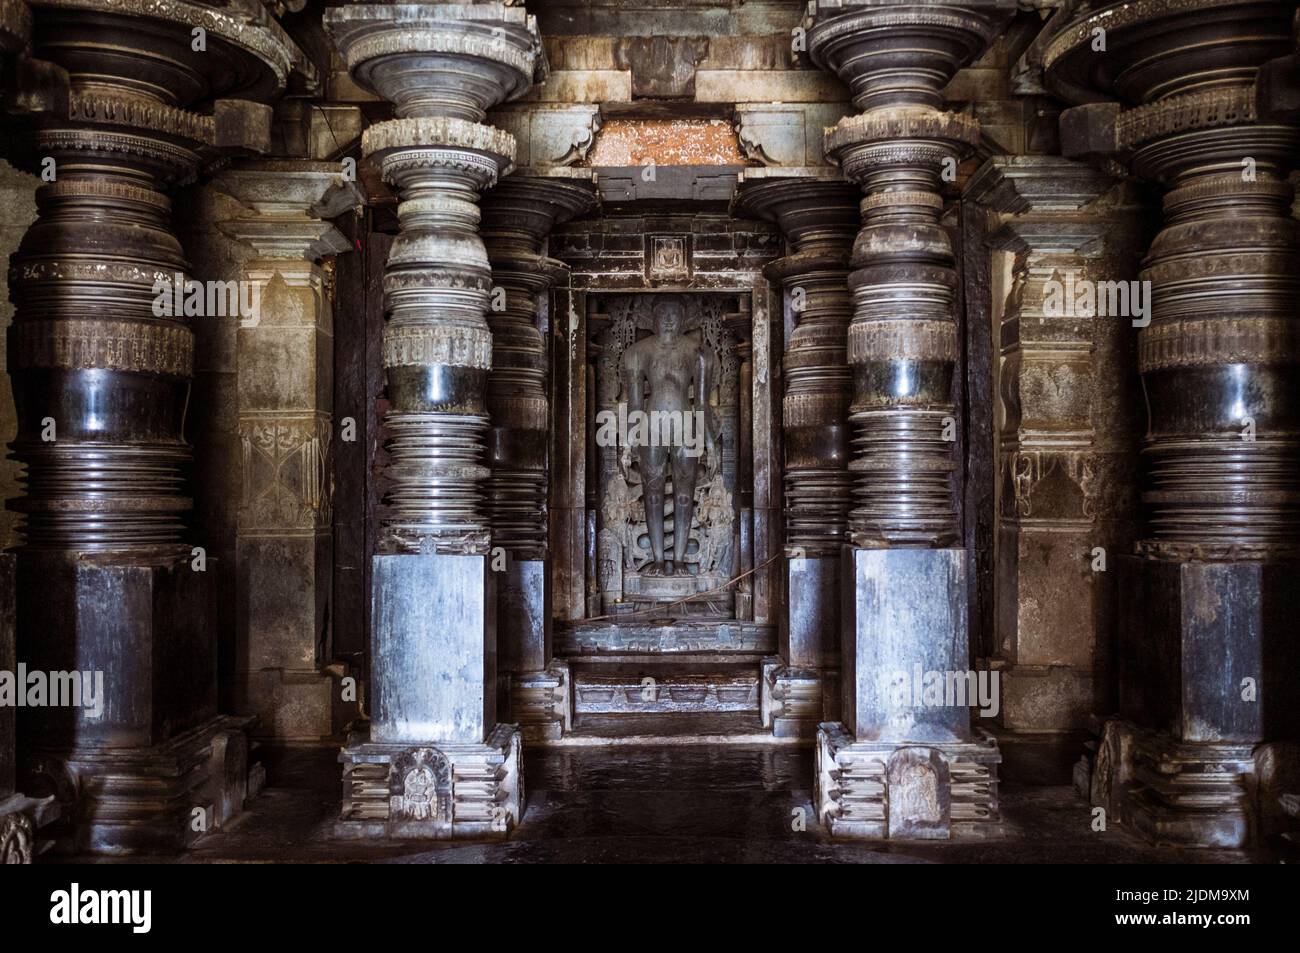 Halebid, Karnataka, India : Interior del templo Parshvanatha basadi Jain del siglo 12th. Escultura de Parshvanatha de 5,5 m (18 pies). Parshvanatha basa Foto de stock